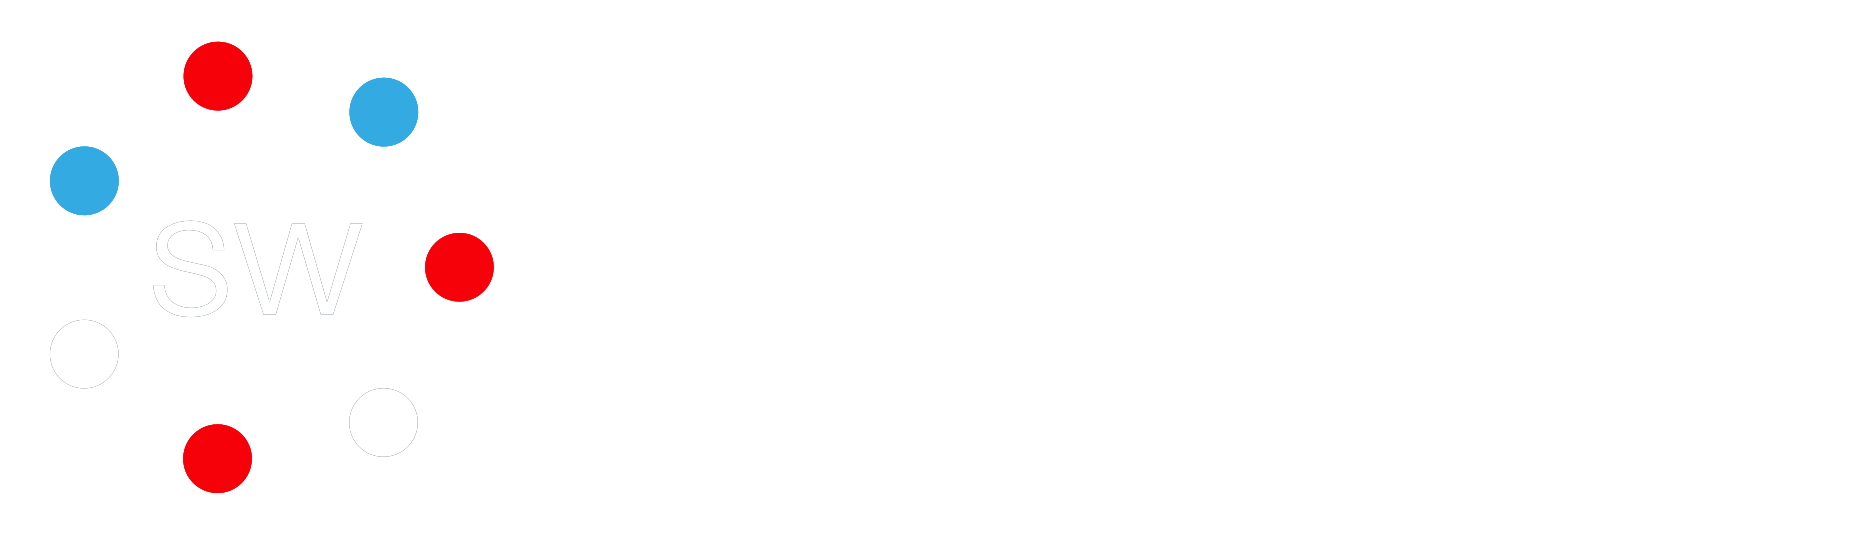 The Marketplace by Seneca Women logo